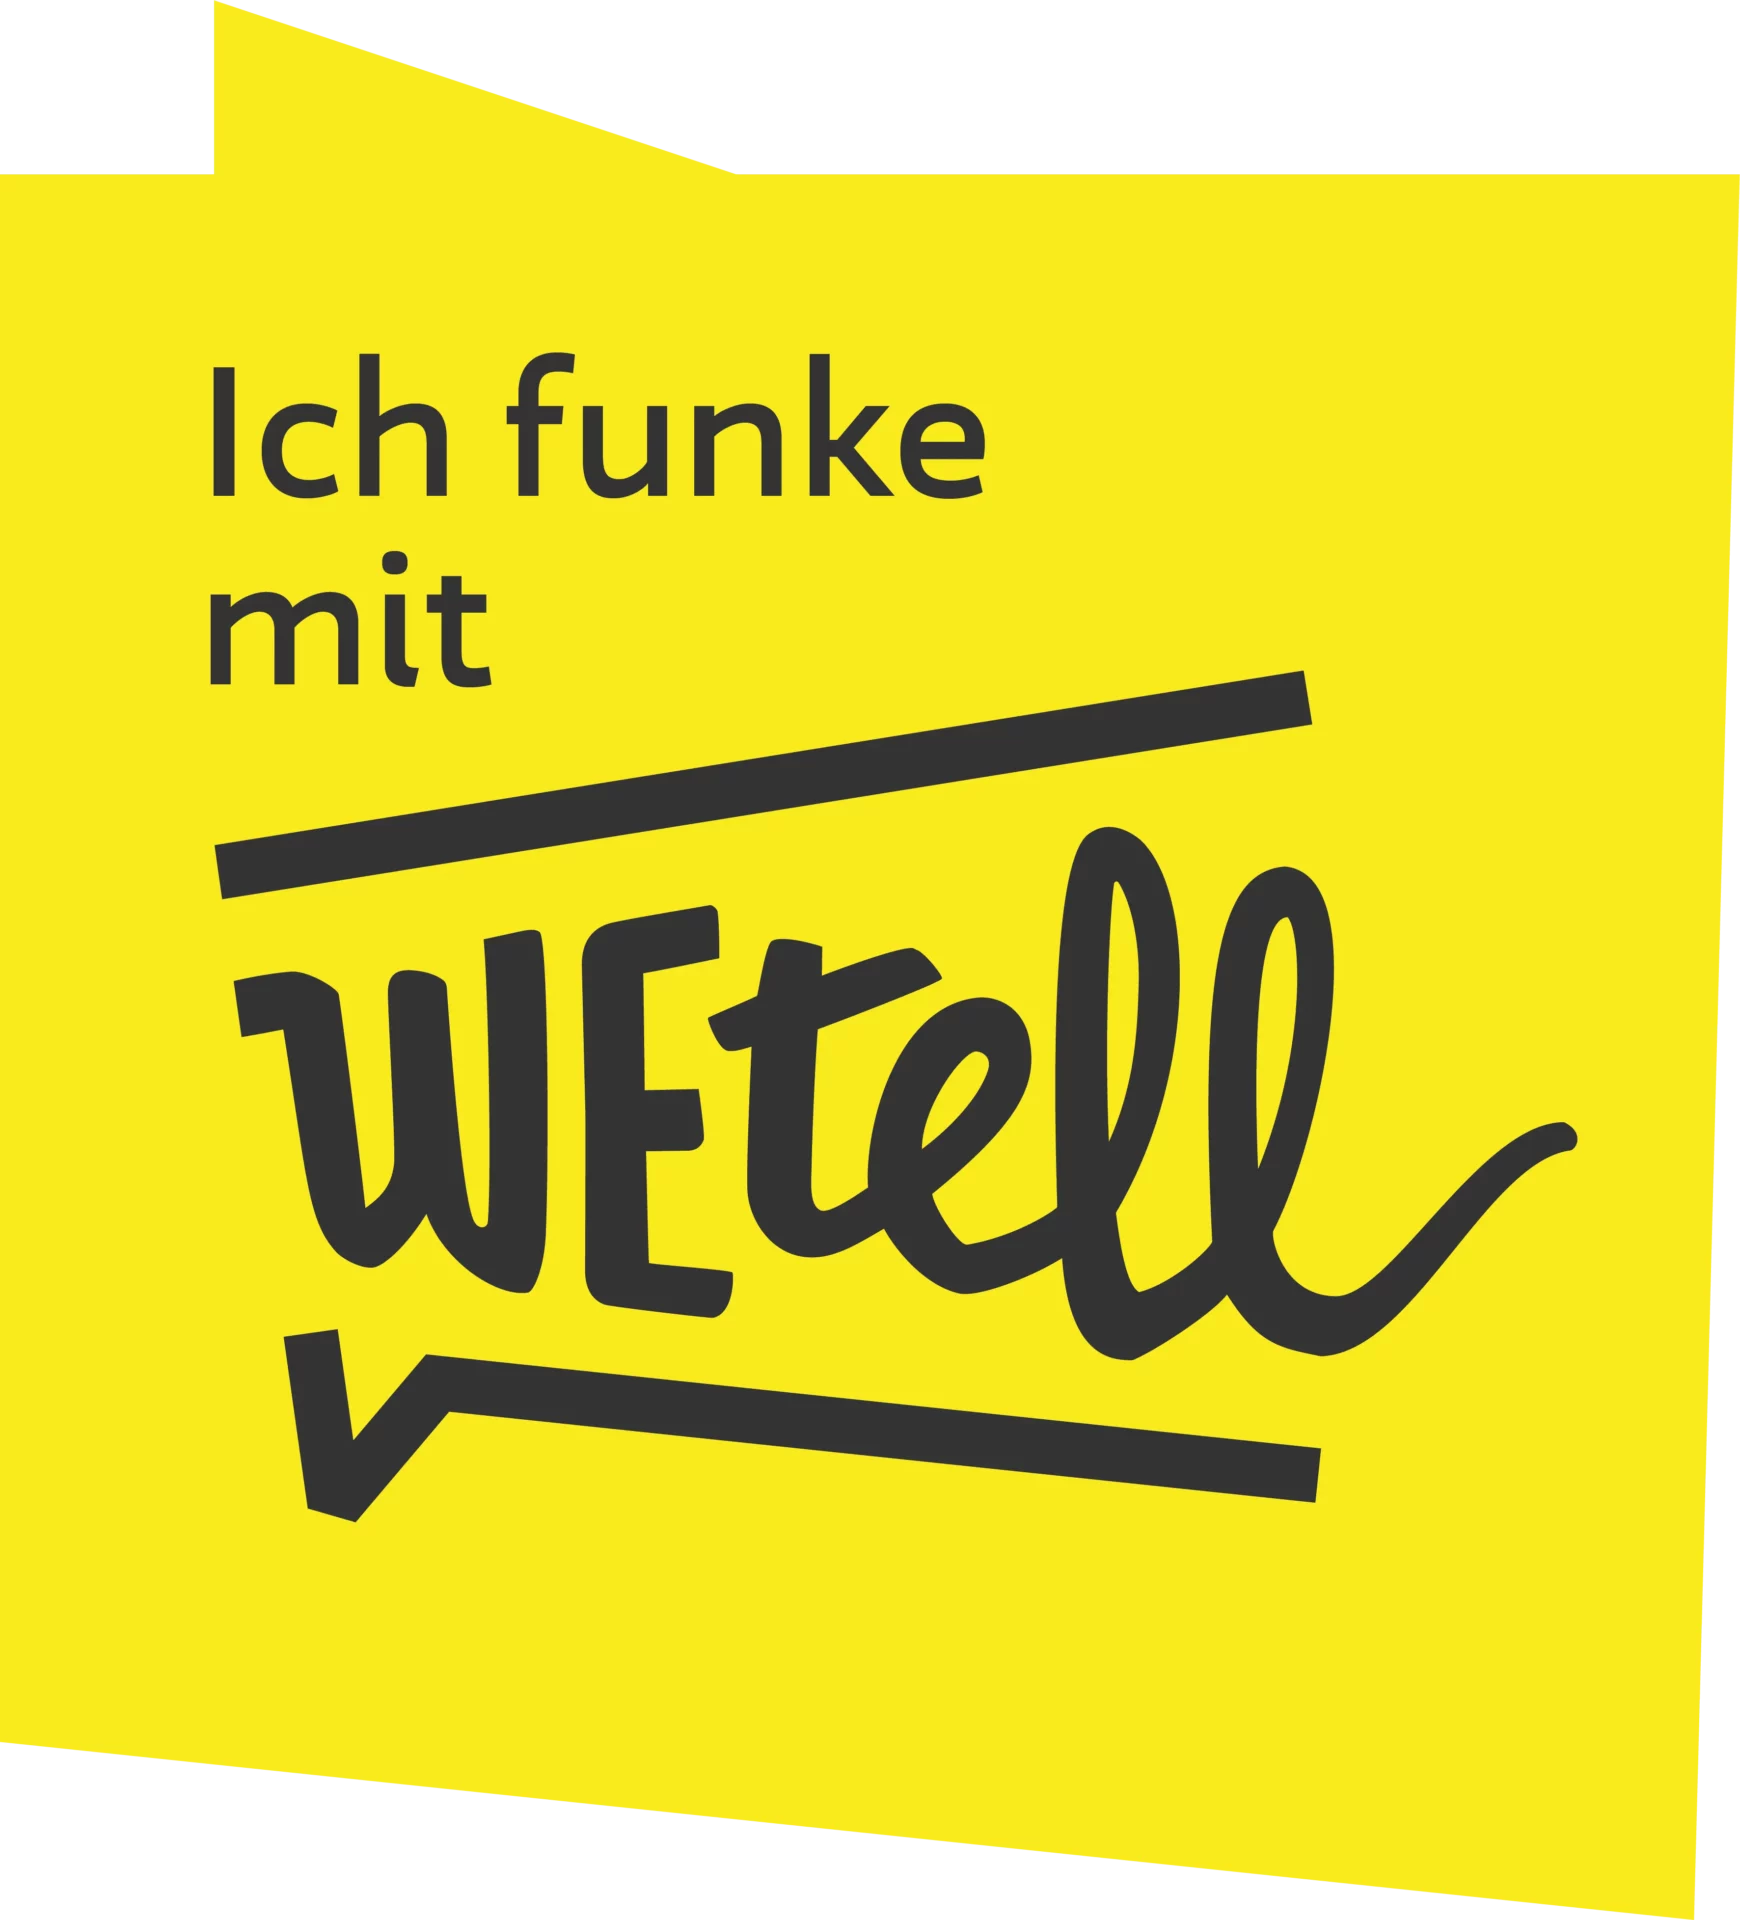 WEtell logo